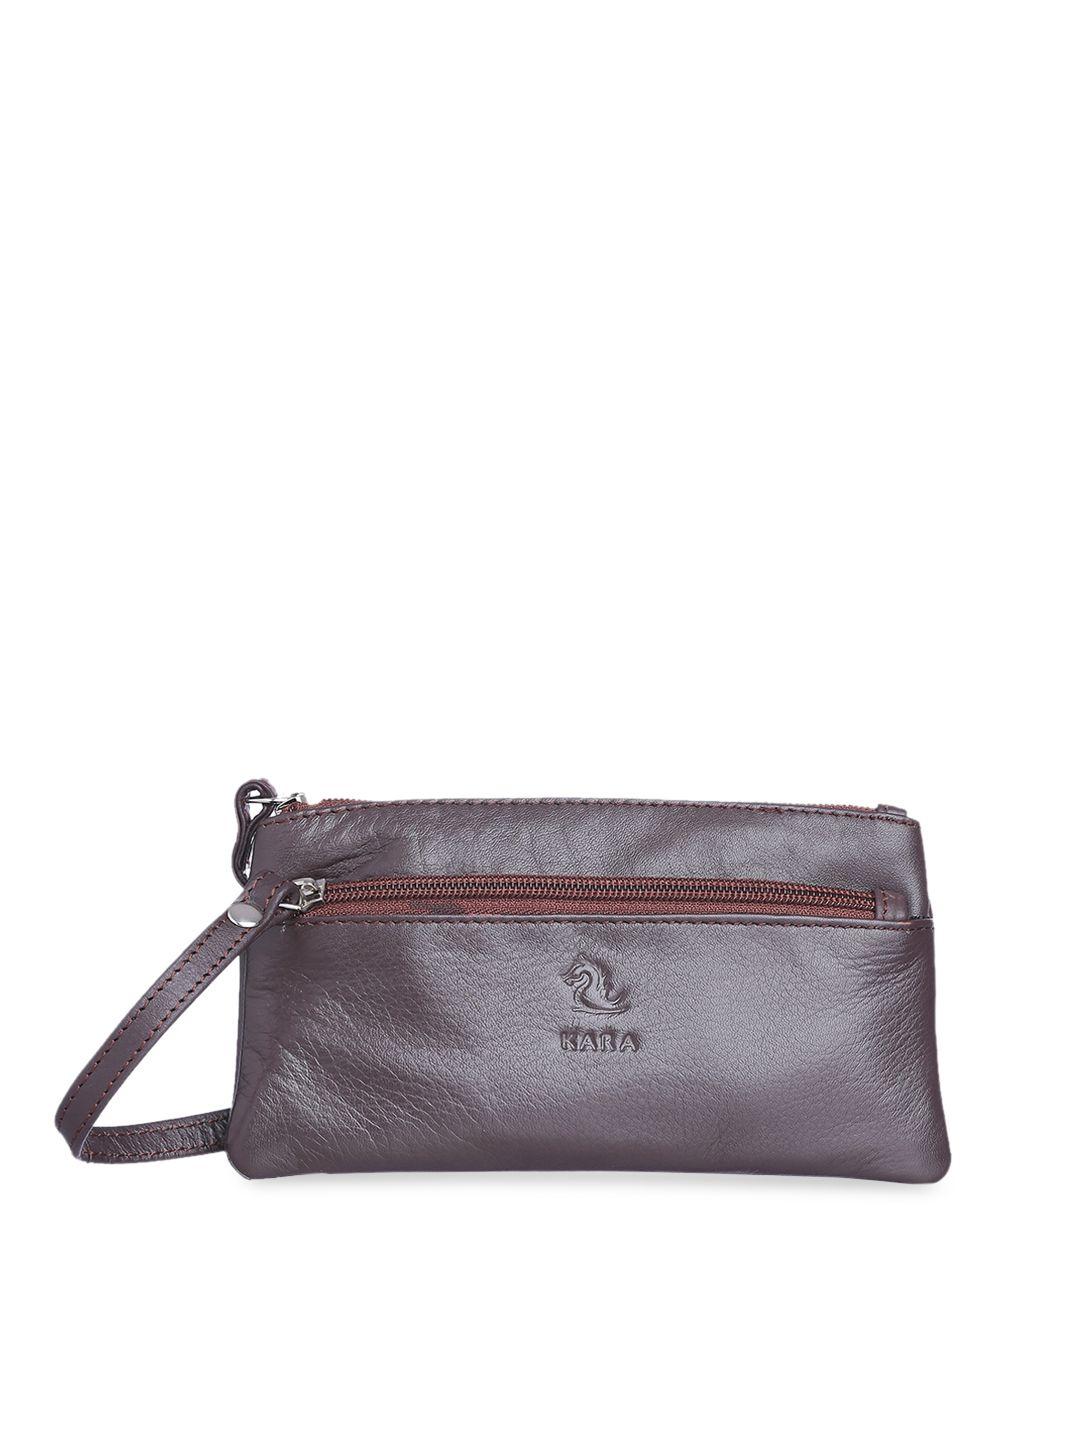 kara coffee brown leather solid purse